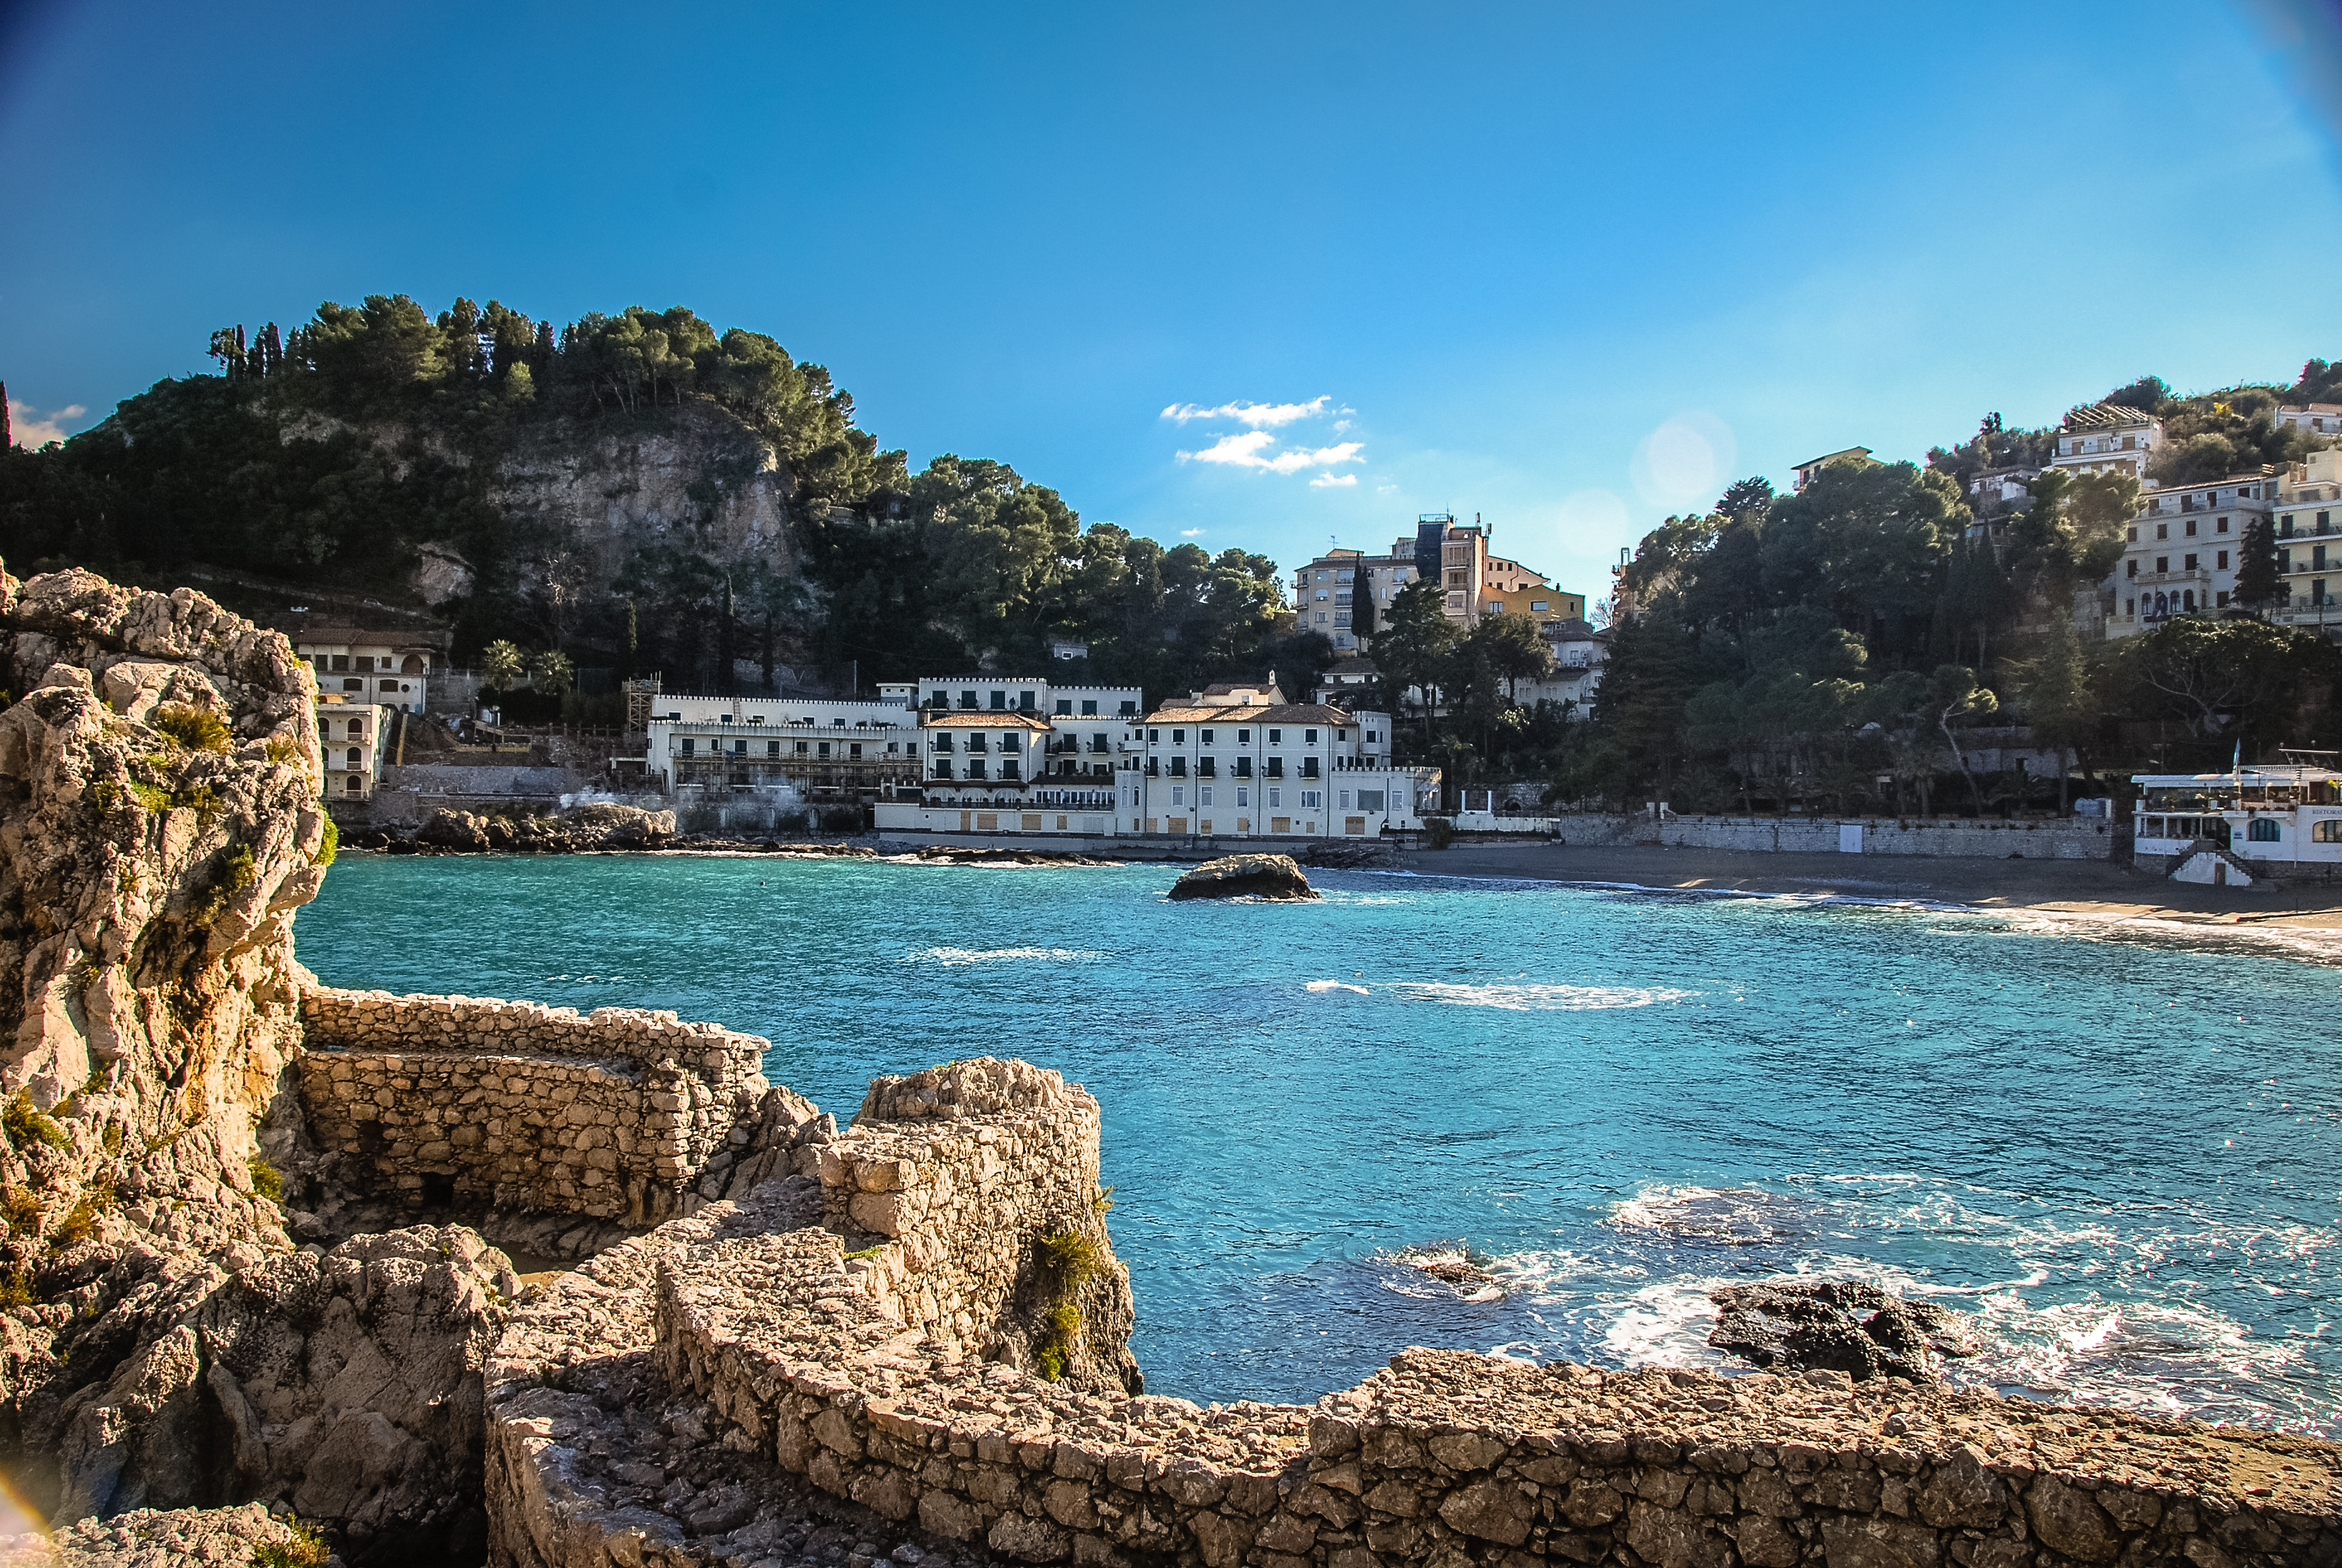 Sicily – rental market booming!